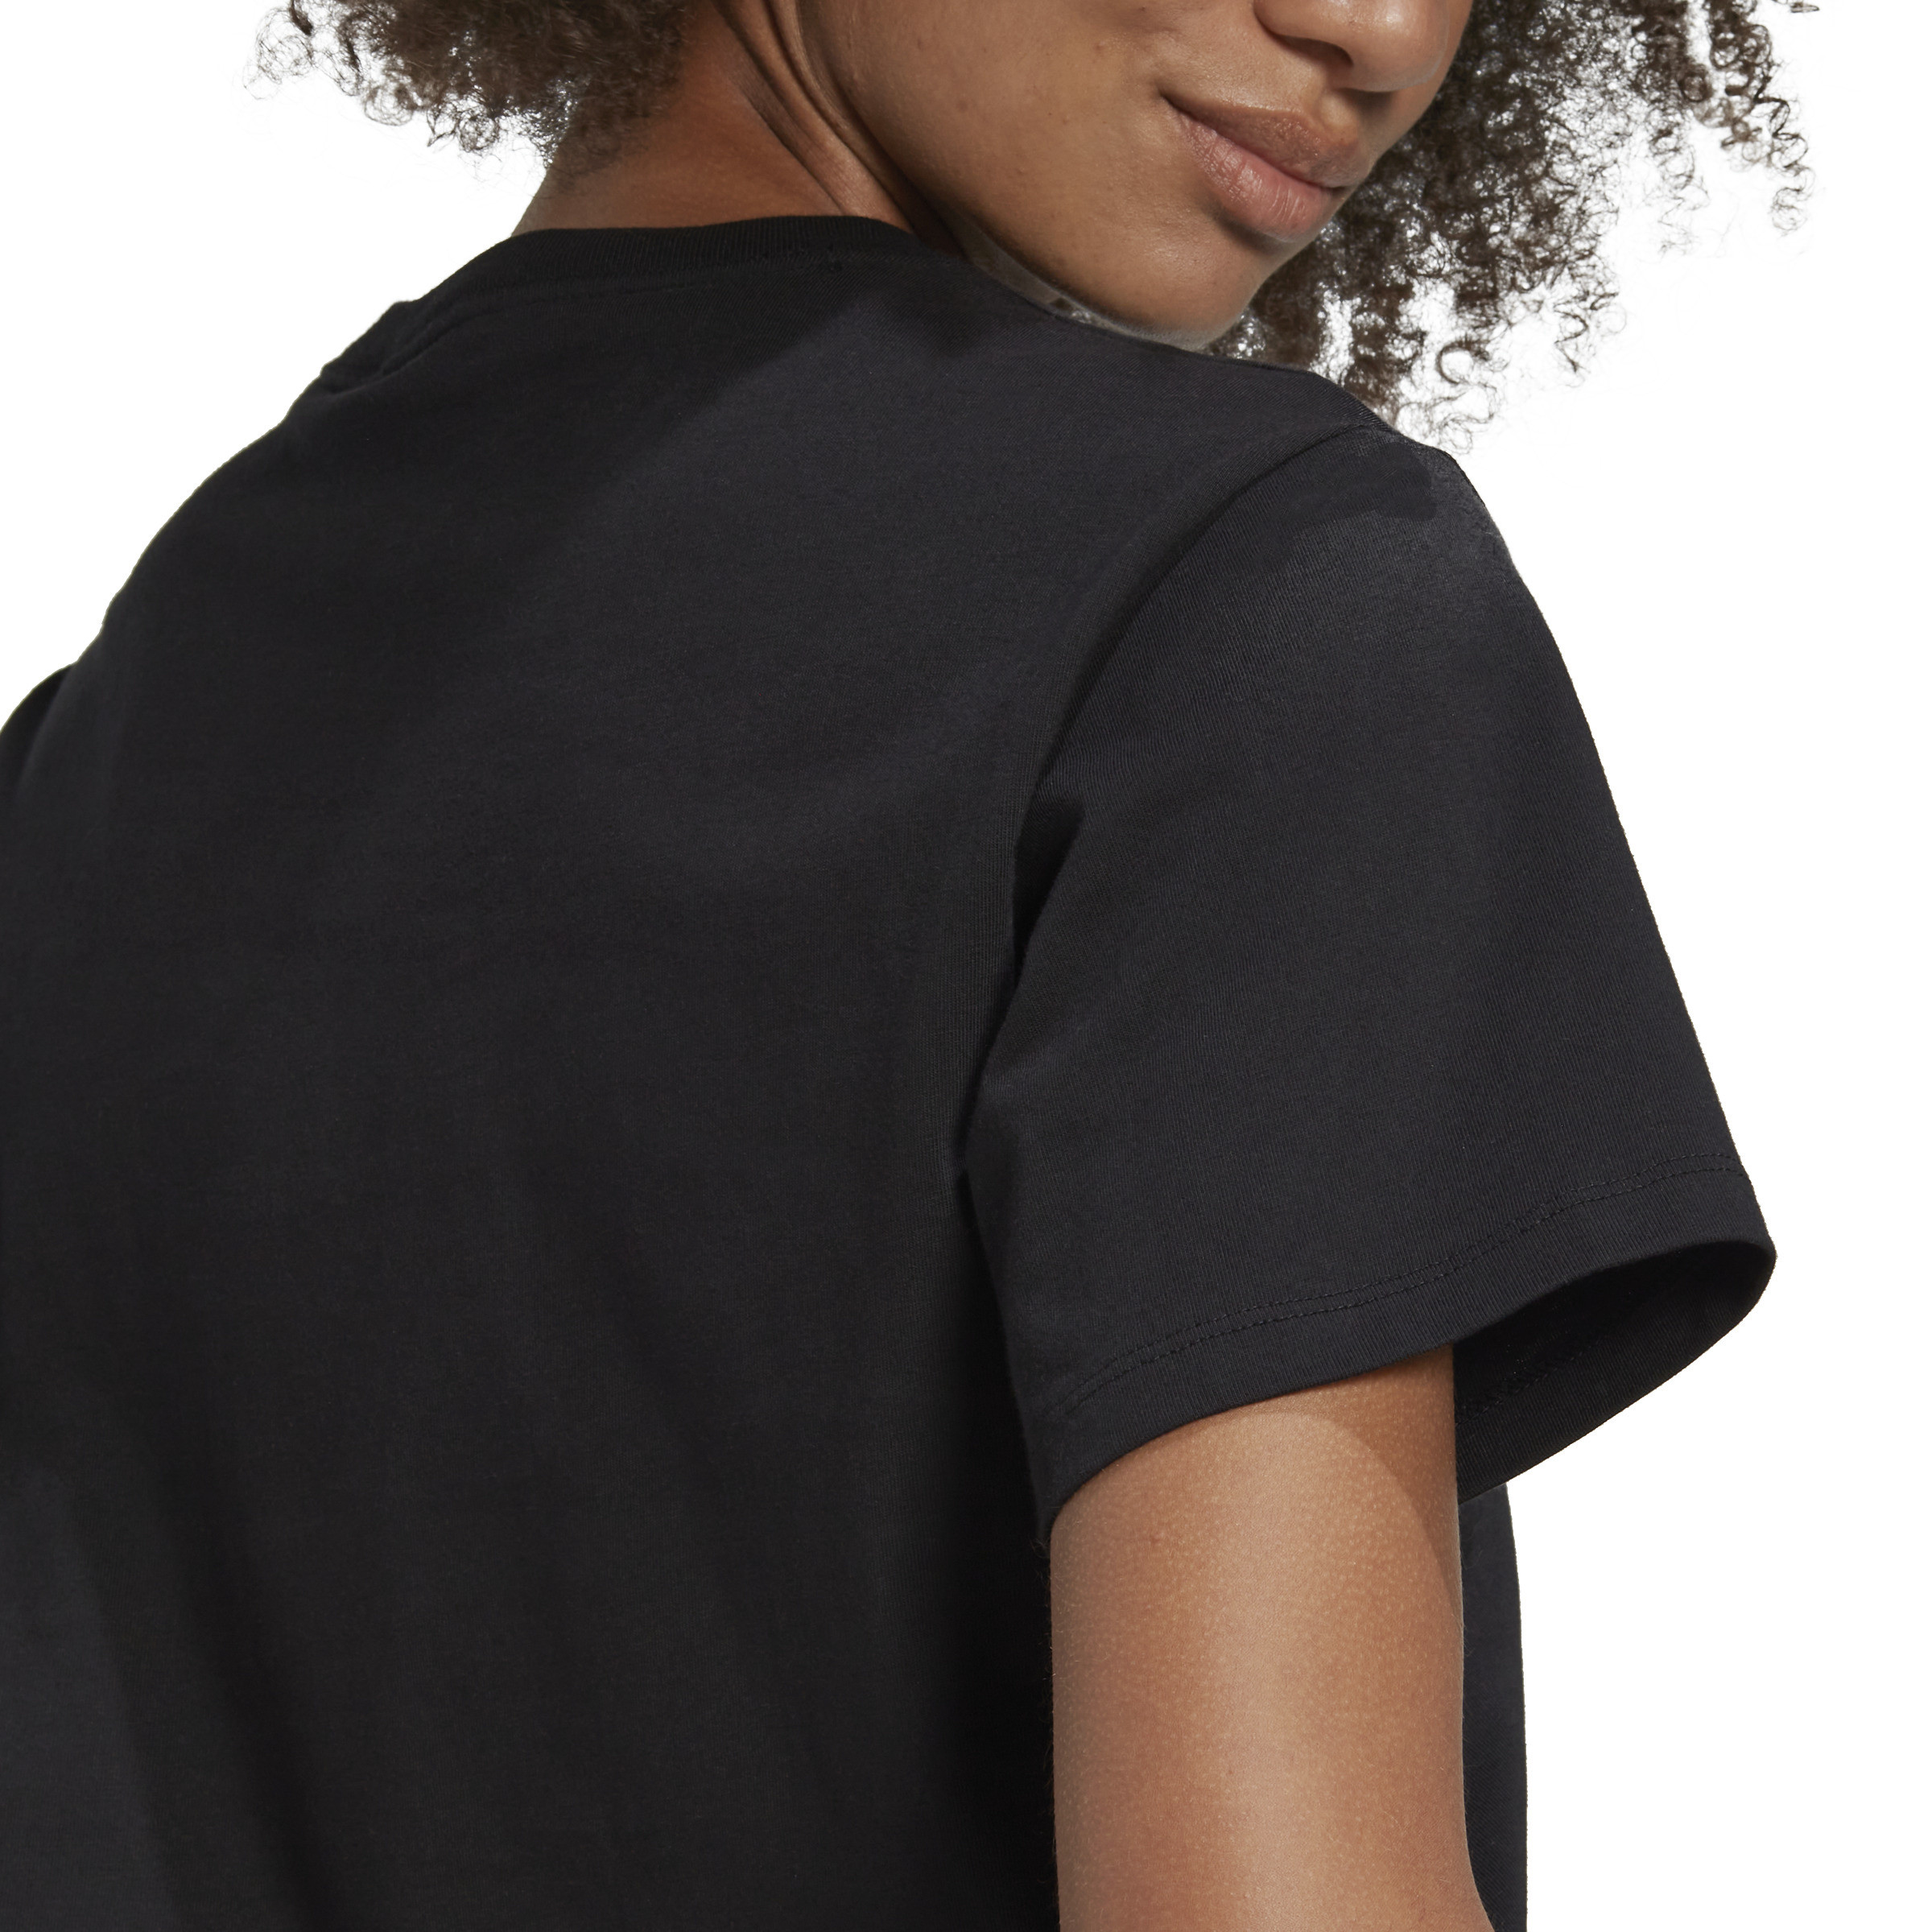 Adidas - T-shirt with logo, Black, large image number 4